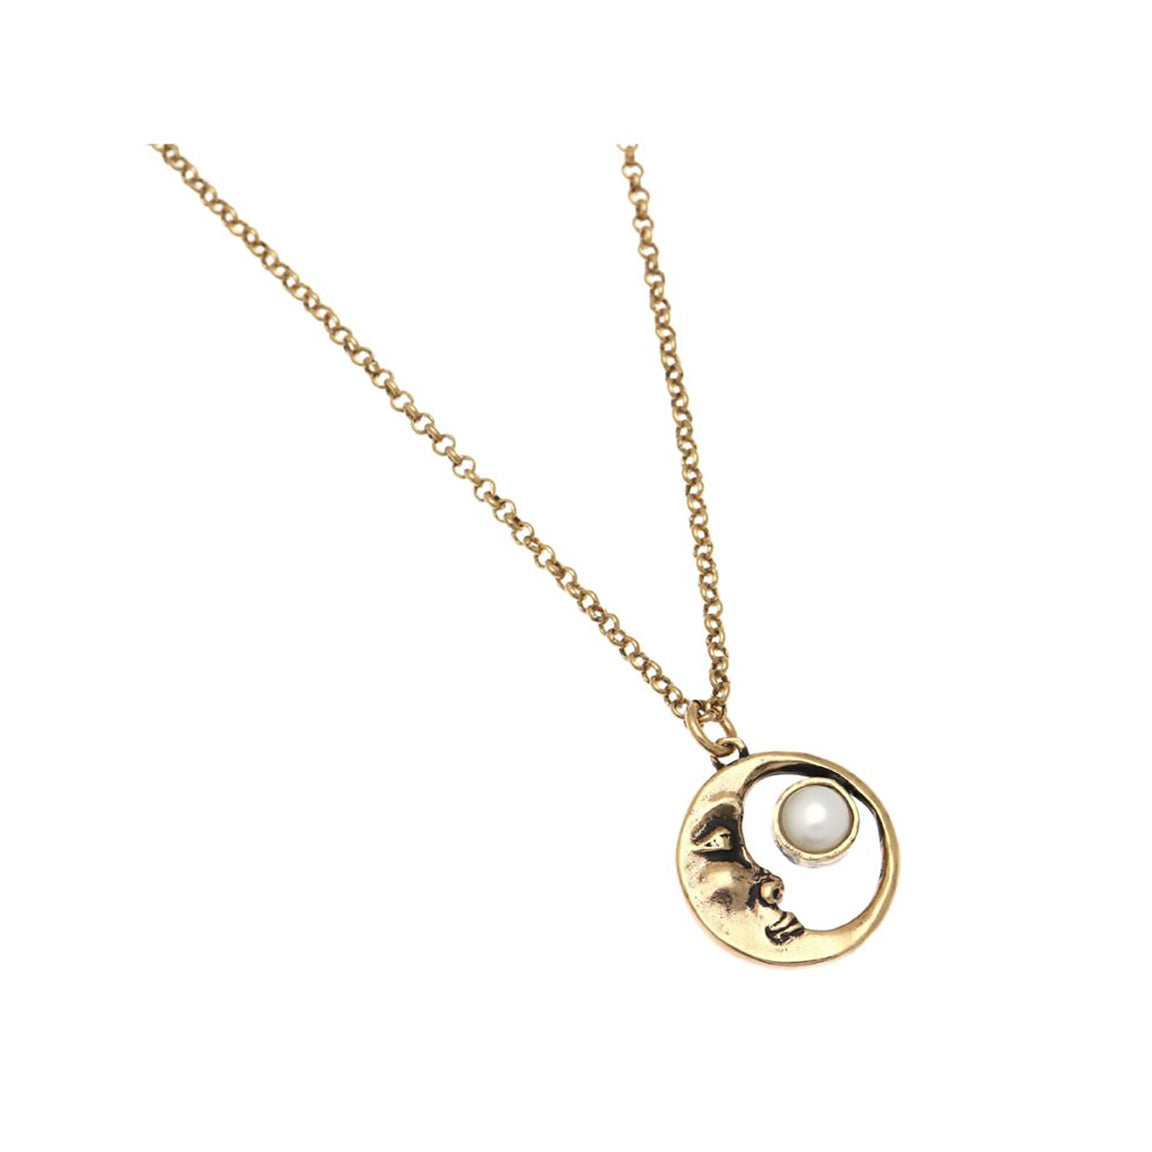 Alcozer Half Moon Necklace / Golden Brass, Pearl / Short Chain / Moon Pendant